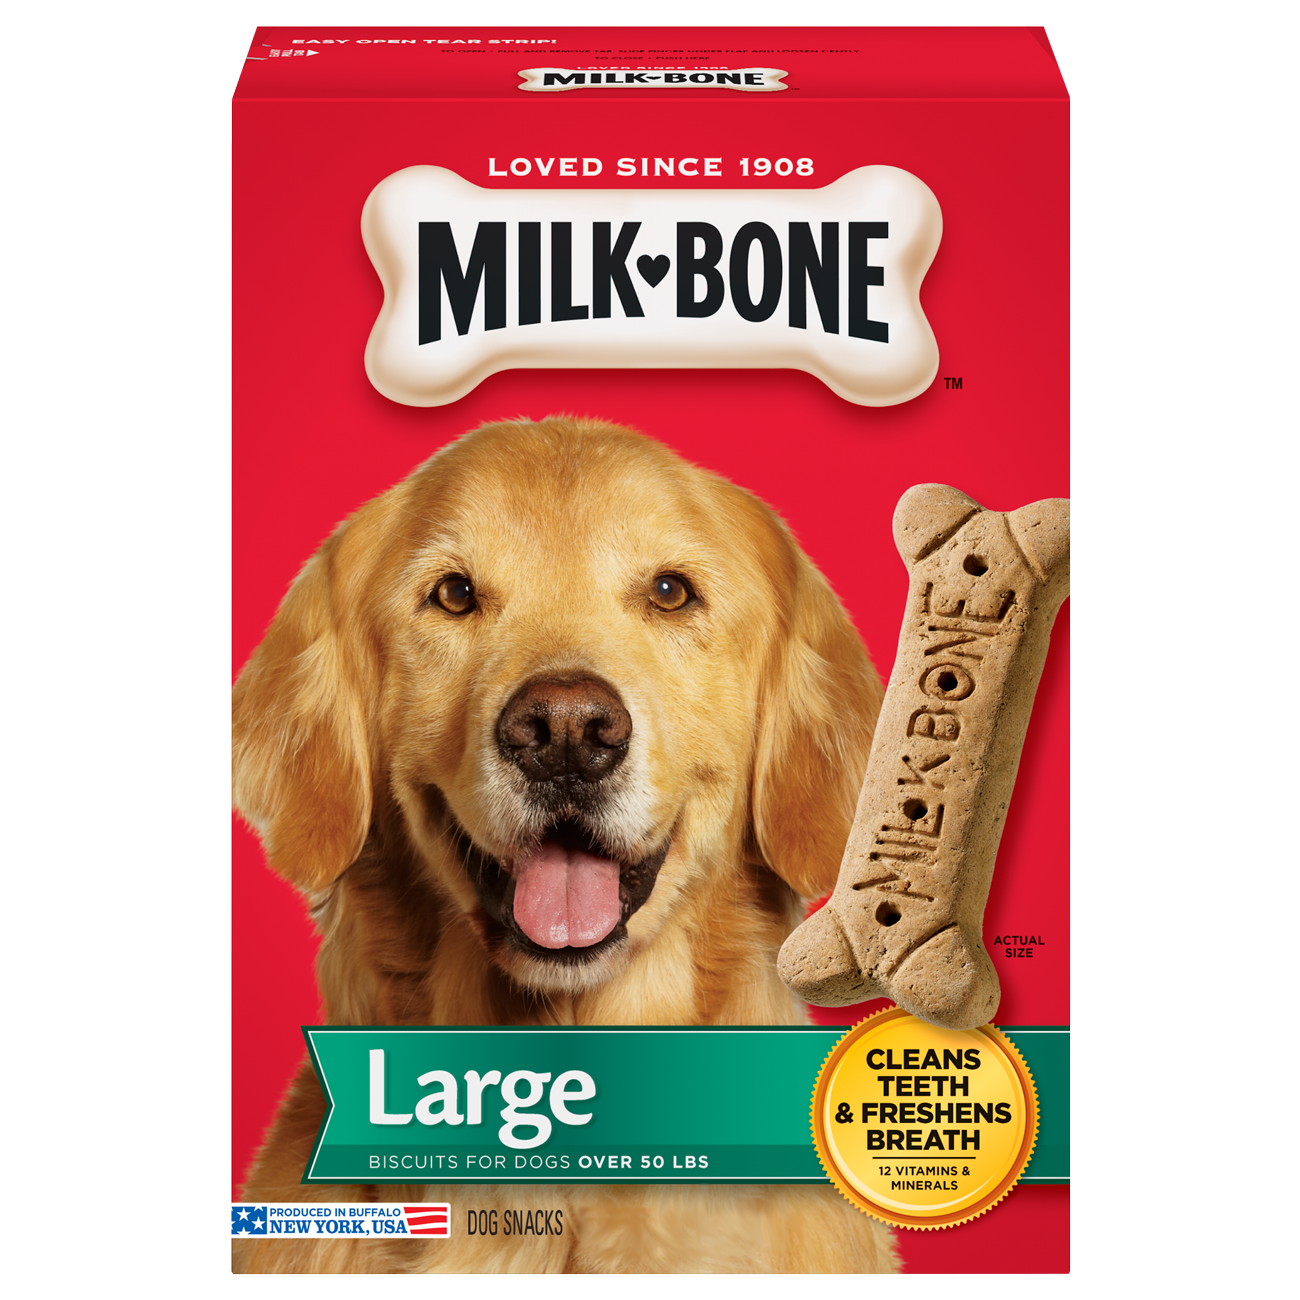 Milk Bone Large Biscuits